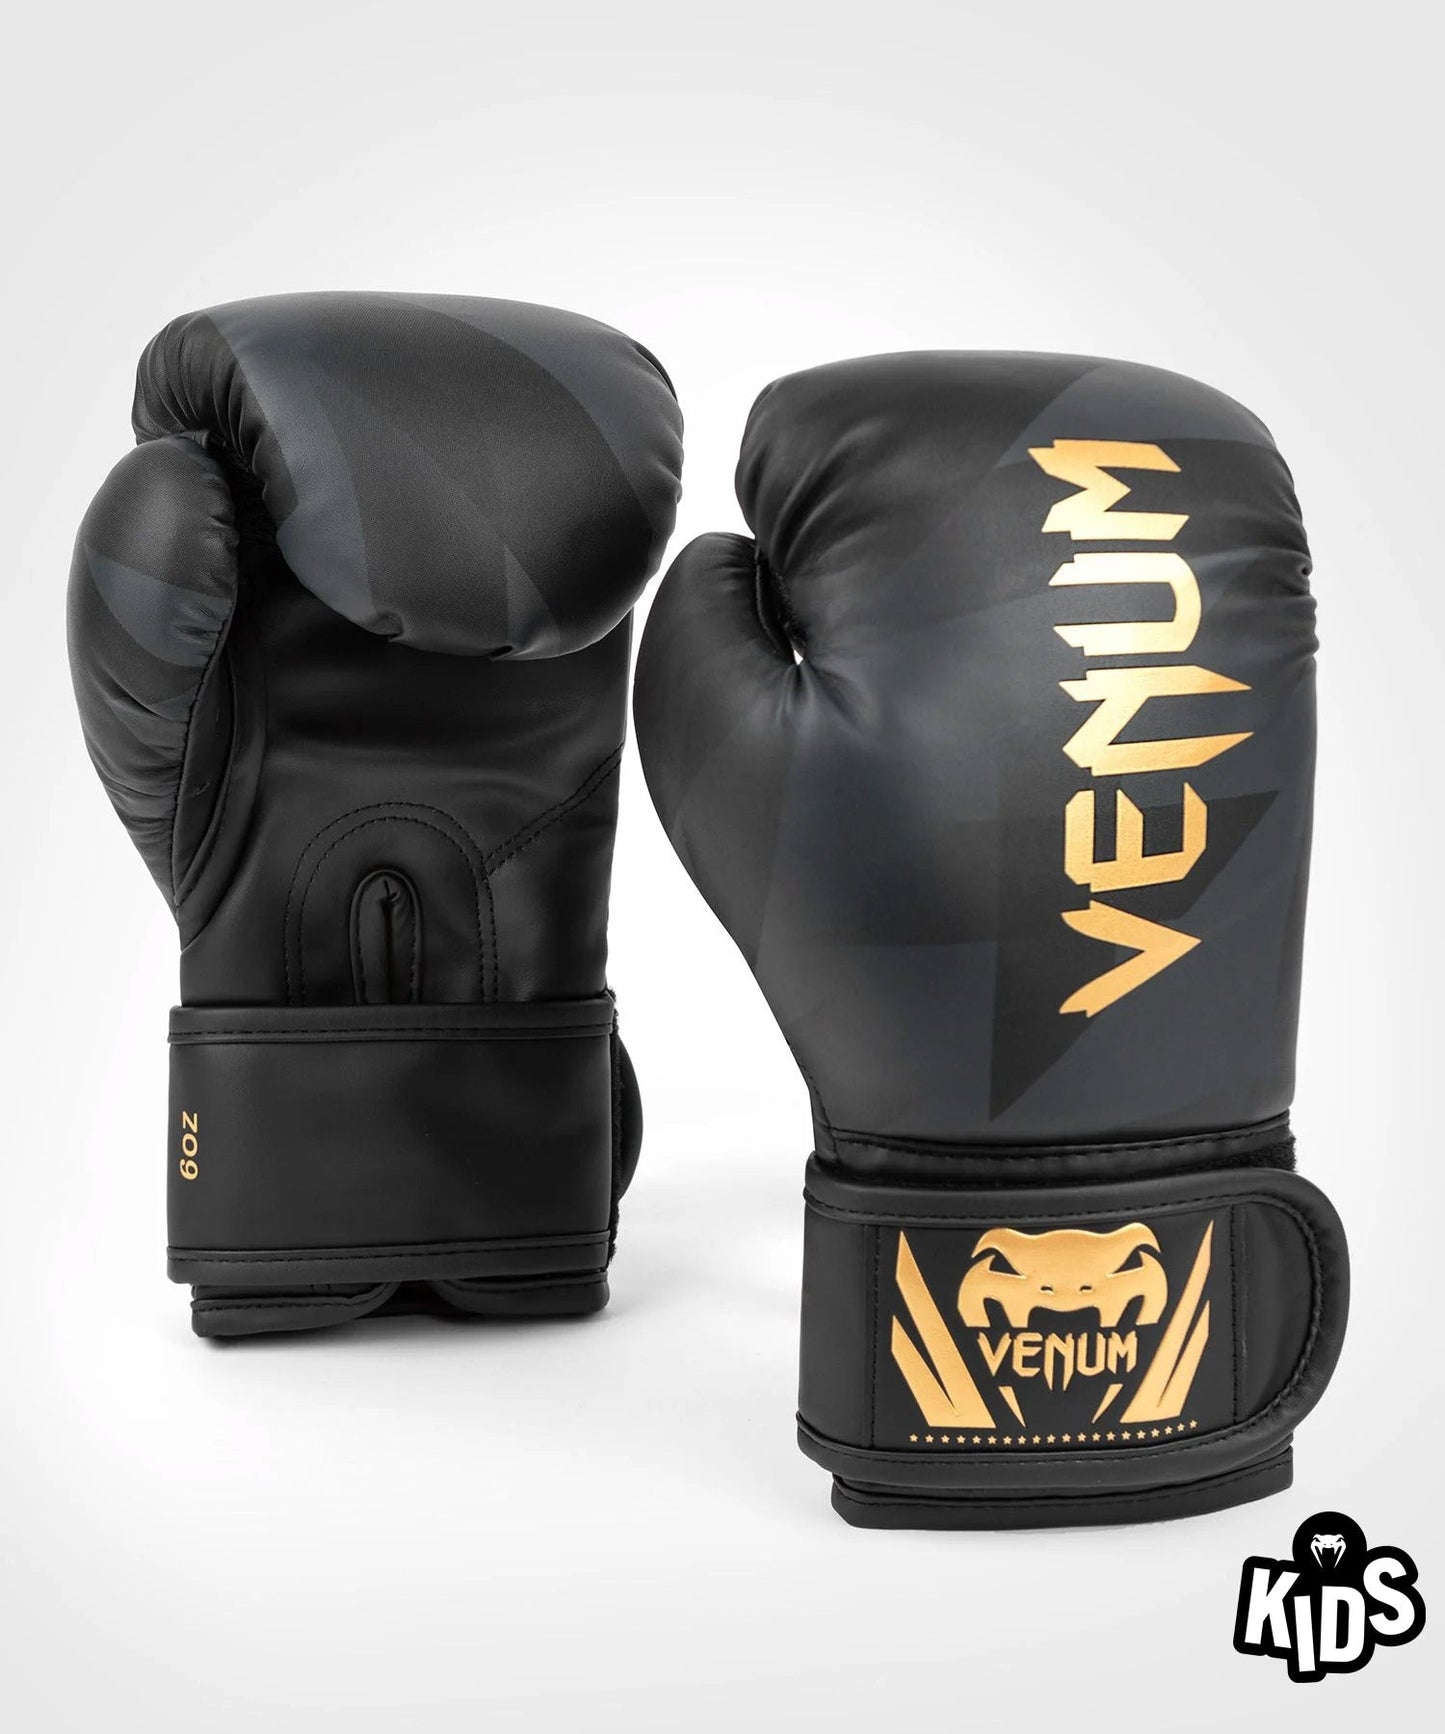 Venum Razor Boxing Gloves - For Kids - Black/Gold - Venum